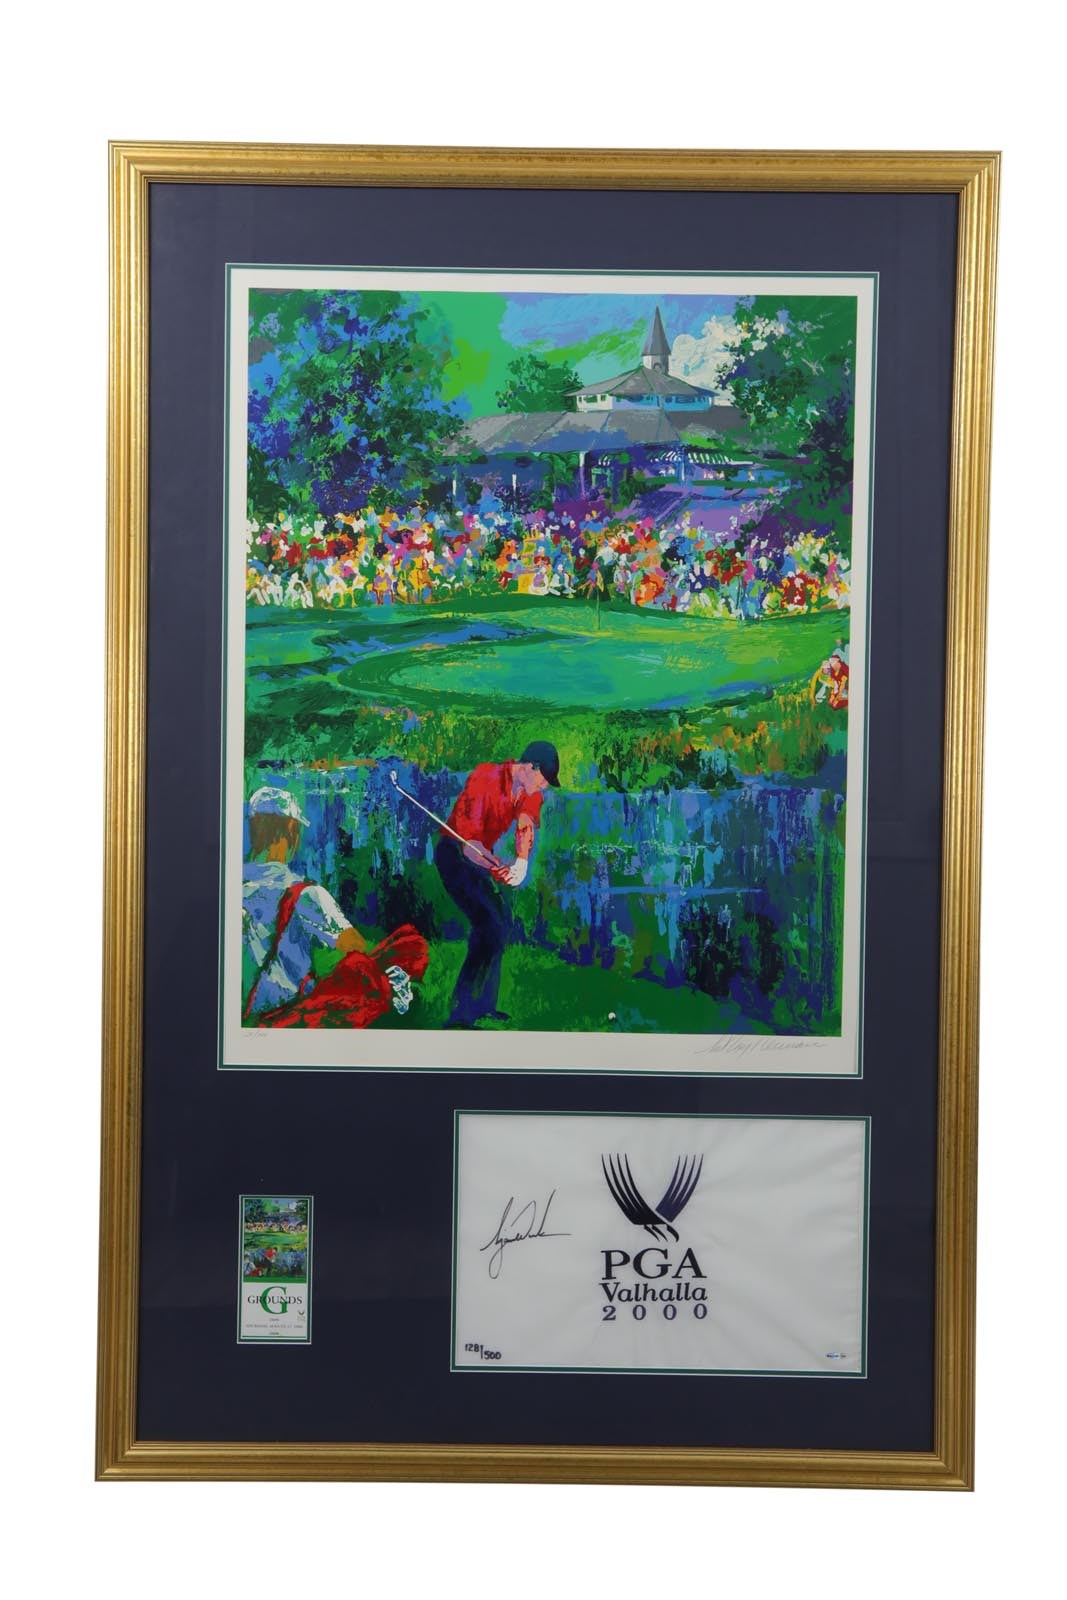 Artists - 2000 LeRoy Neiman Signed "Valhalla" Print, Tiger Woods Signed Valhalla Flag & Valhalla Ticket Display